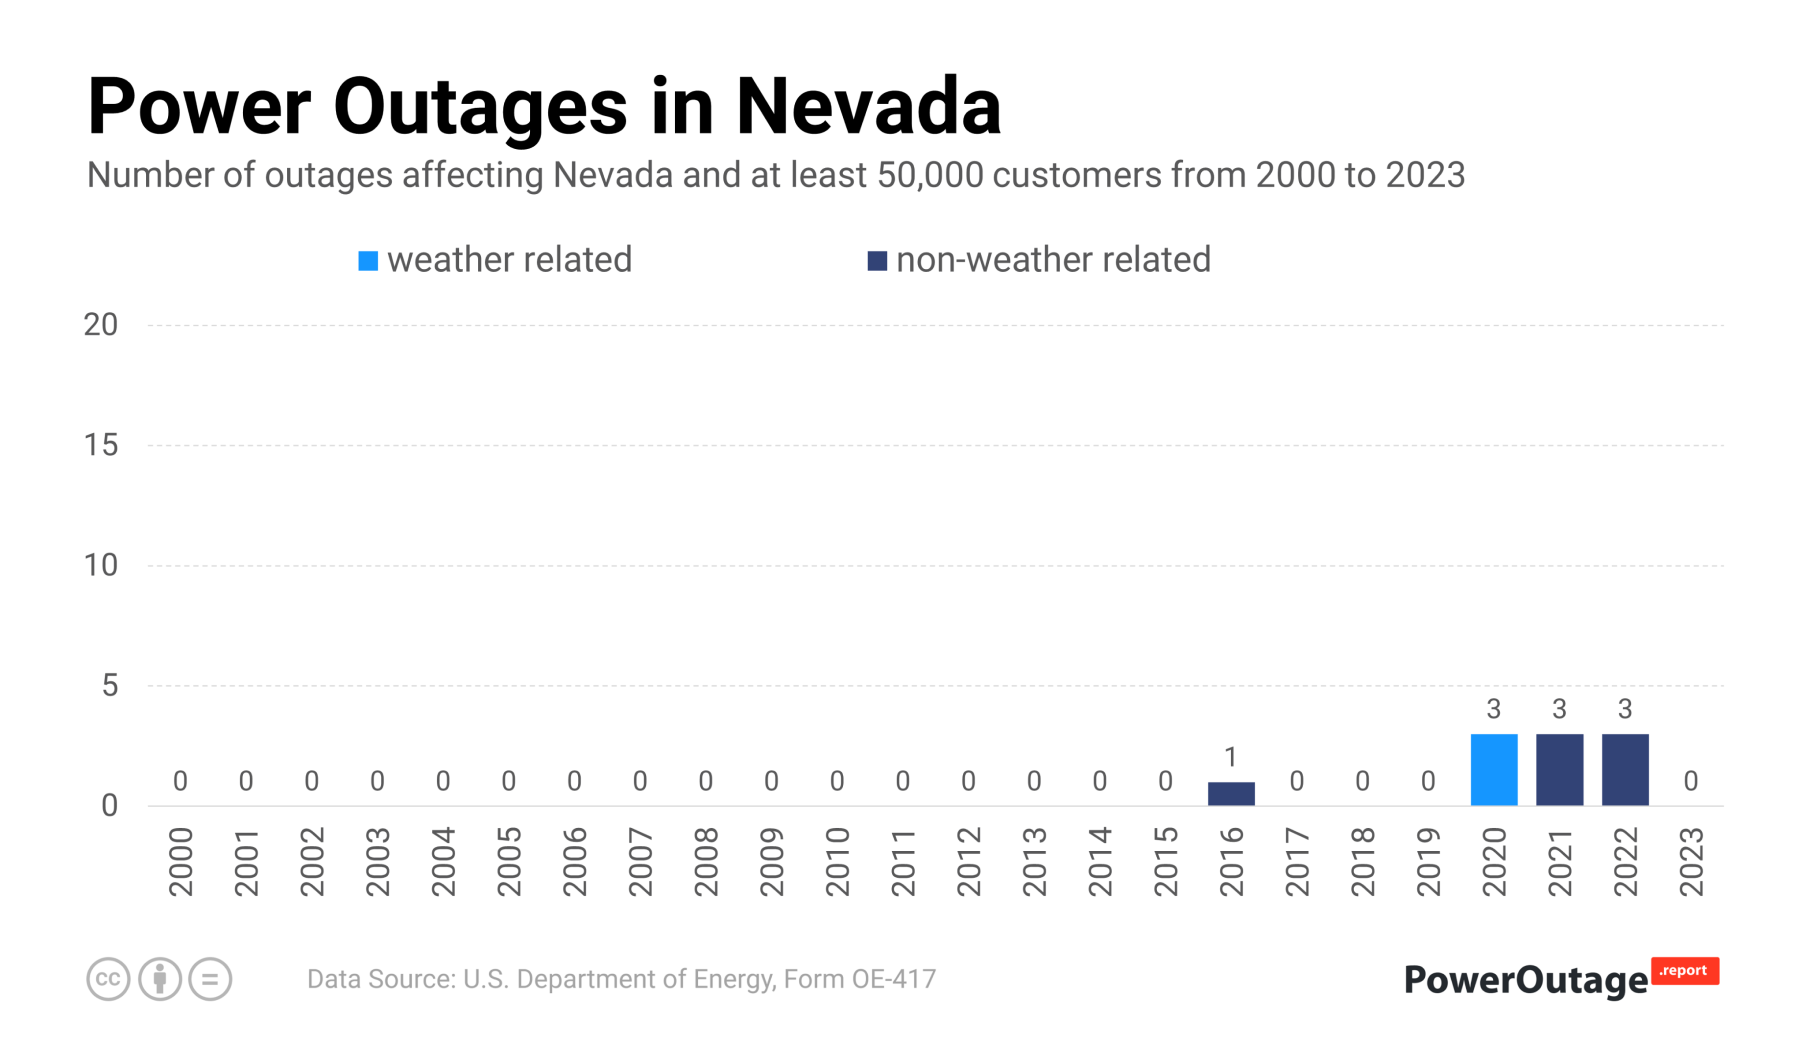 Nevada Power Outage Statistics (2000 - 2021)